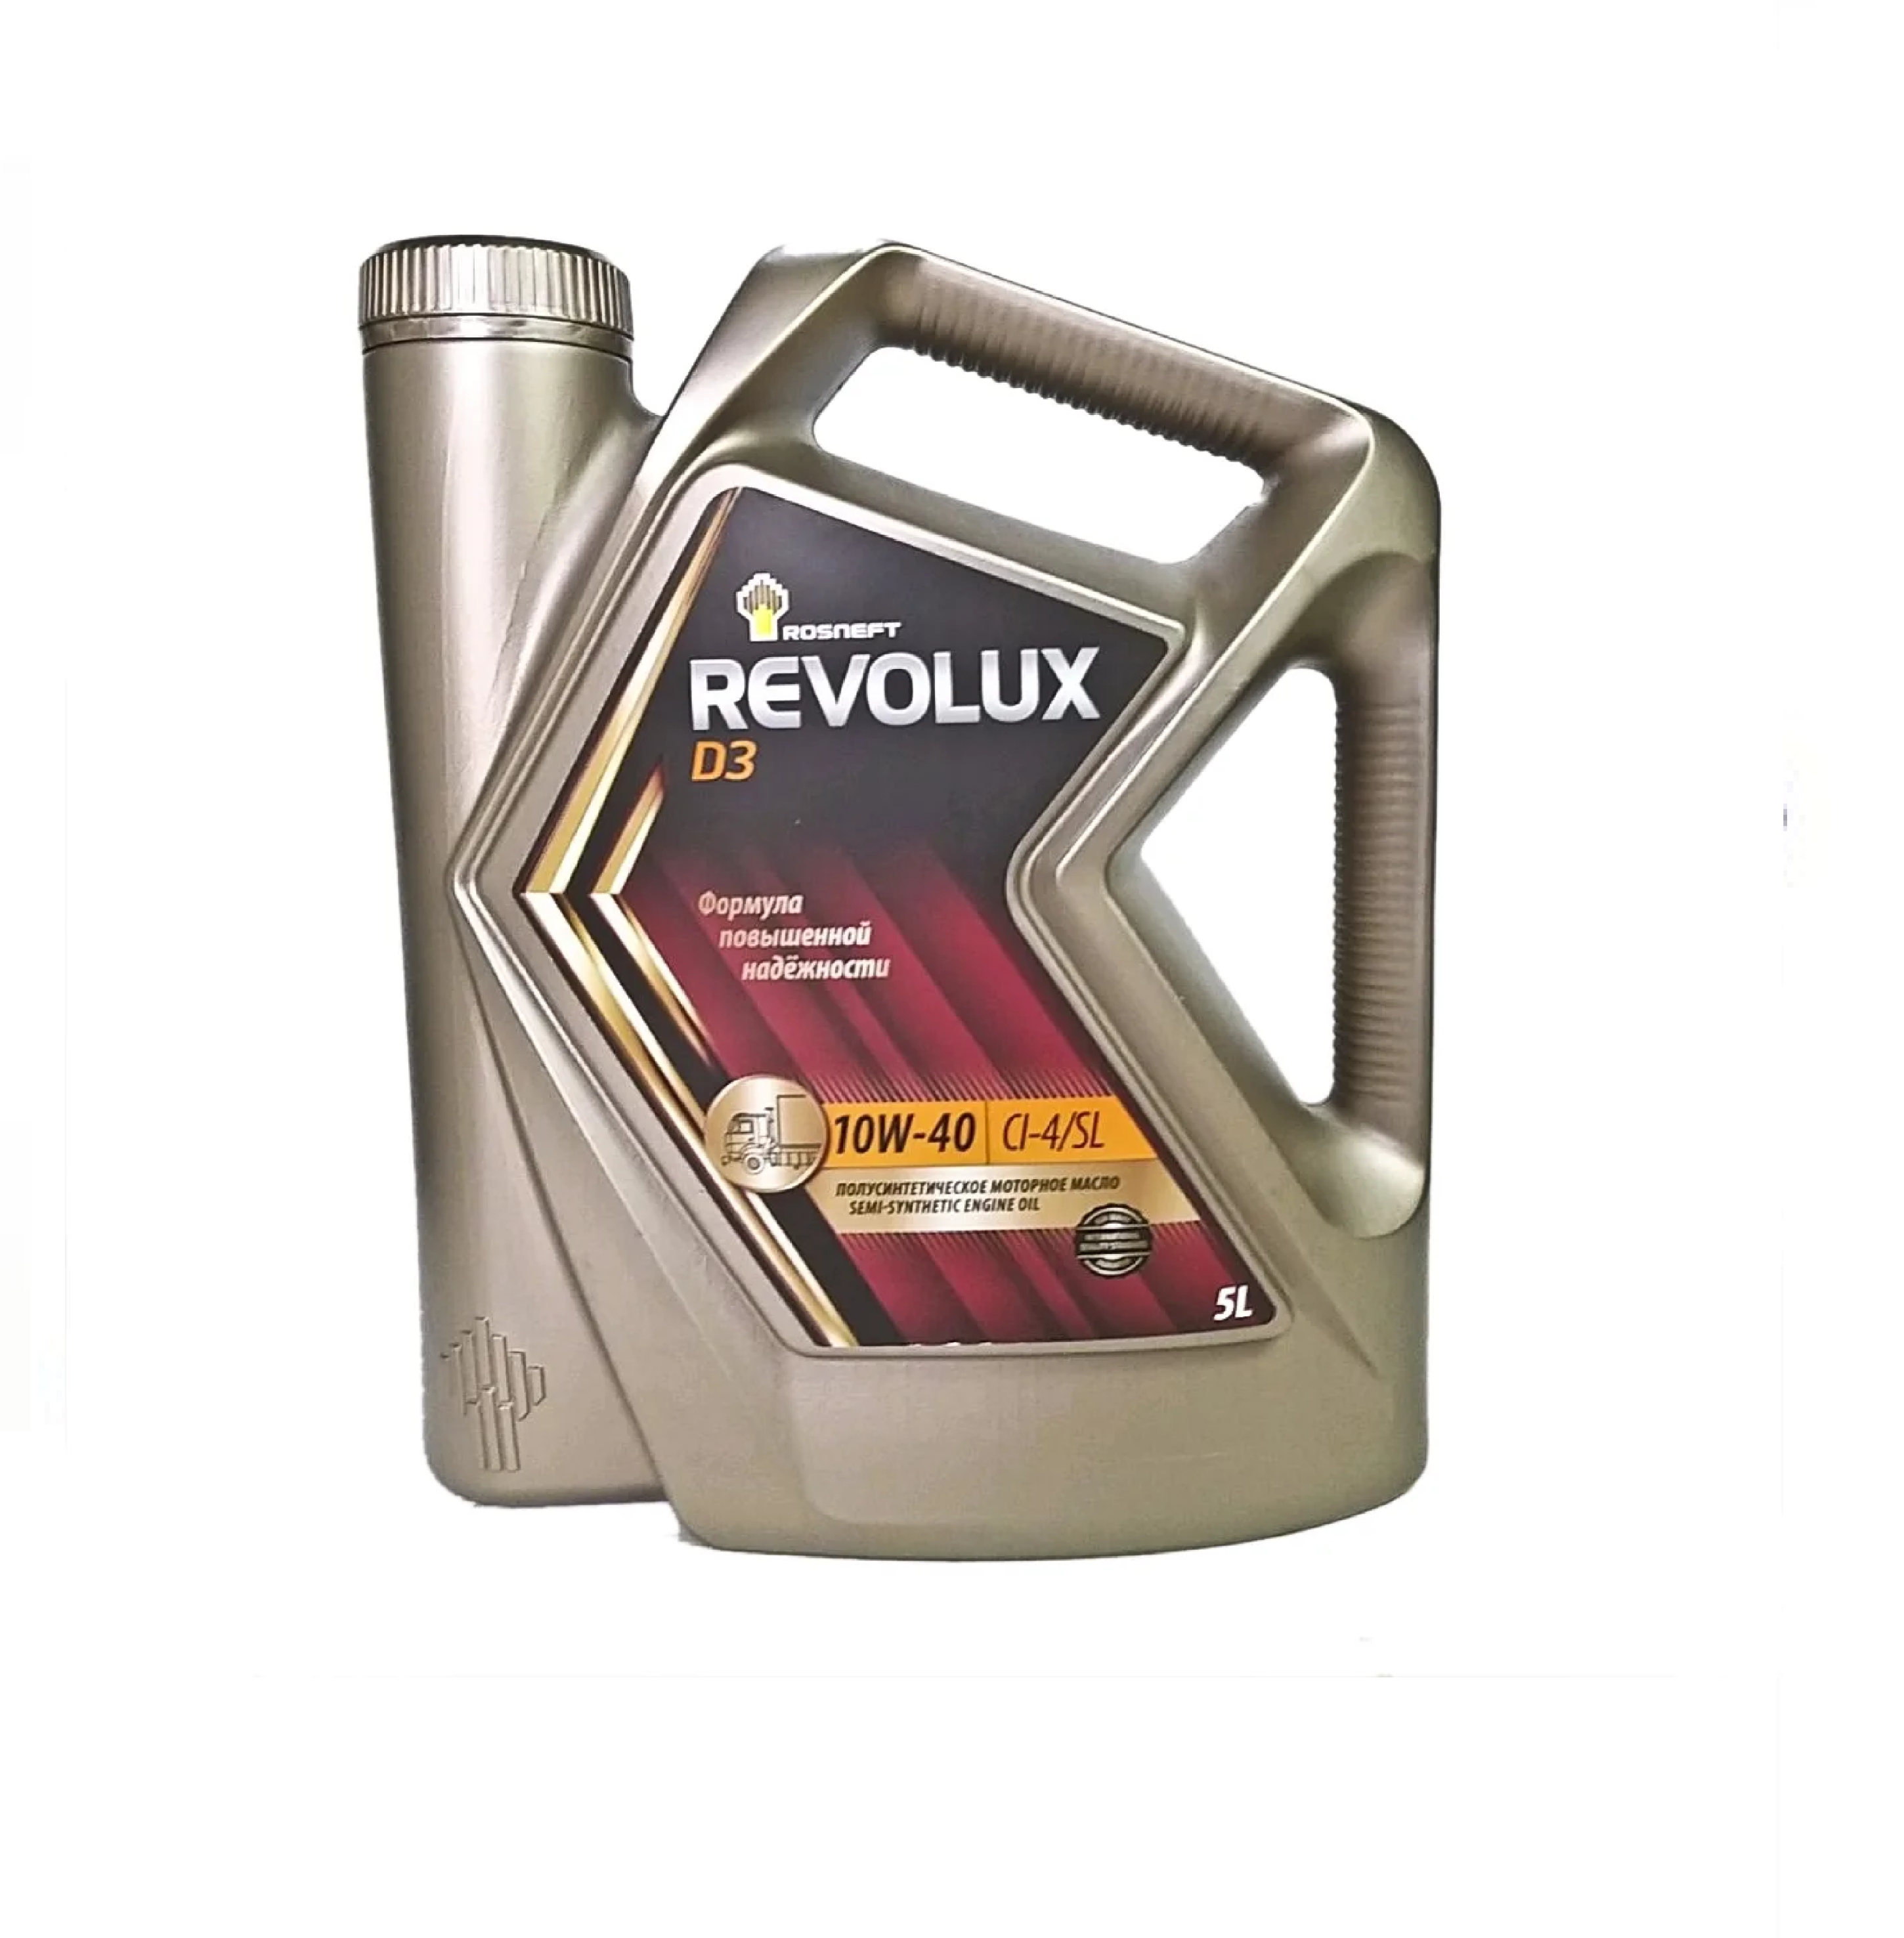 Масло моторное Rosneft Revolux d3 5w–40 20л. Масло моторное Роснефть 10w 40 полусинтетика. Масло моторное Rosneft Revolux d3 10w/- 40 ci-4/SL. Rosneft Revolux d1 15w-40 (5л.). Купить масло роснефть полусинтетика